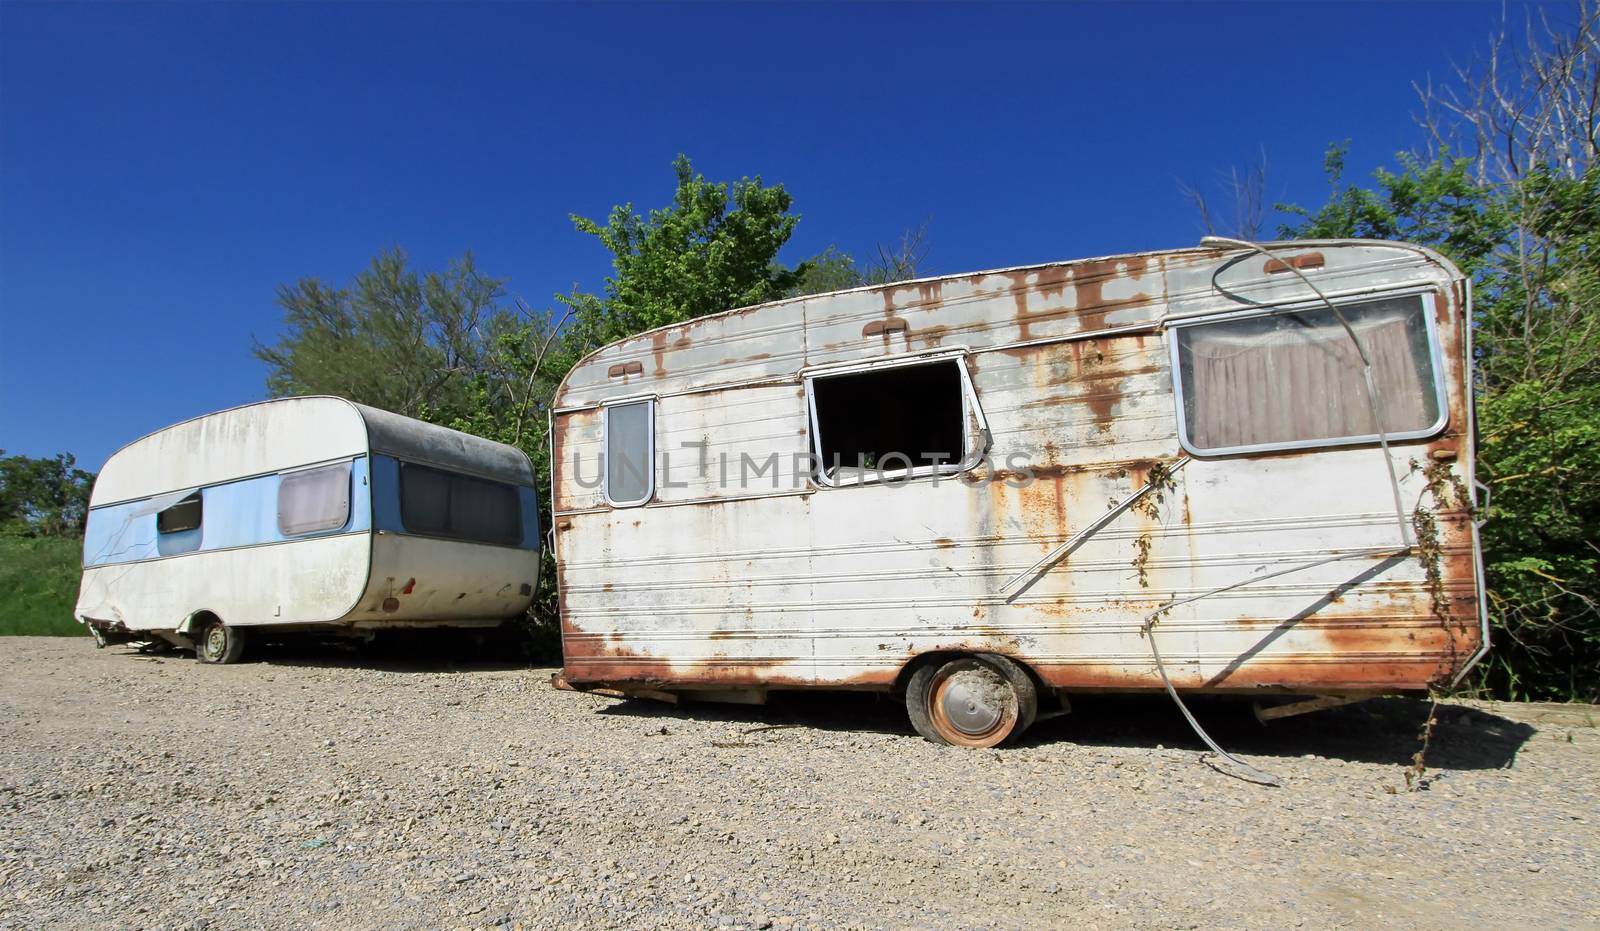 Old abandoned caravans by Elenaphotos21